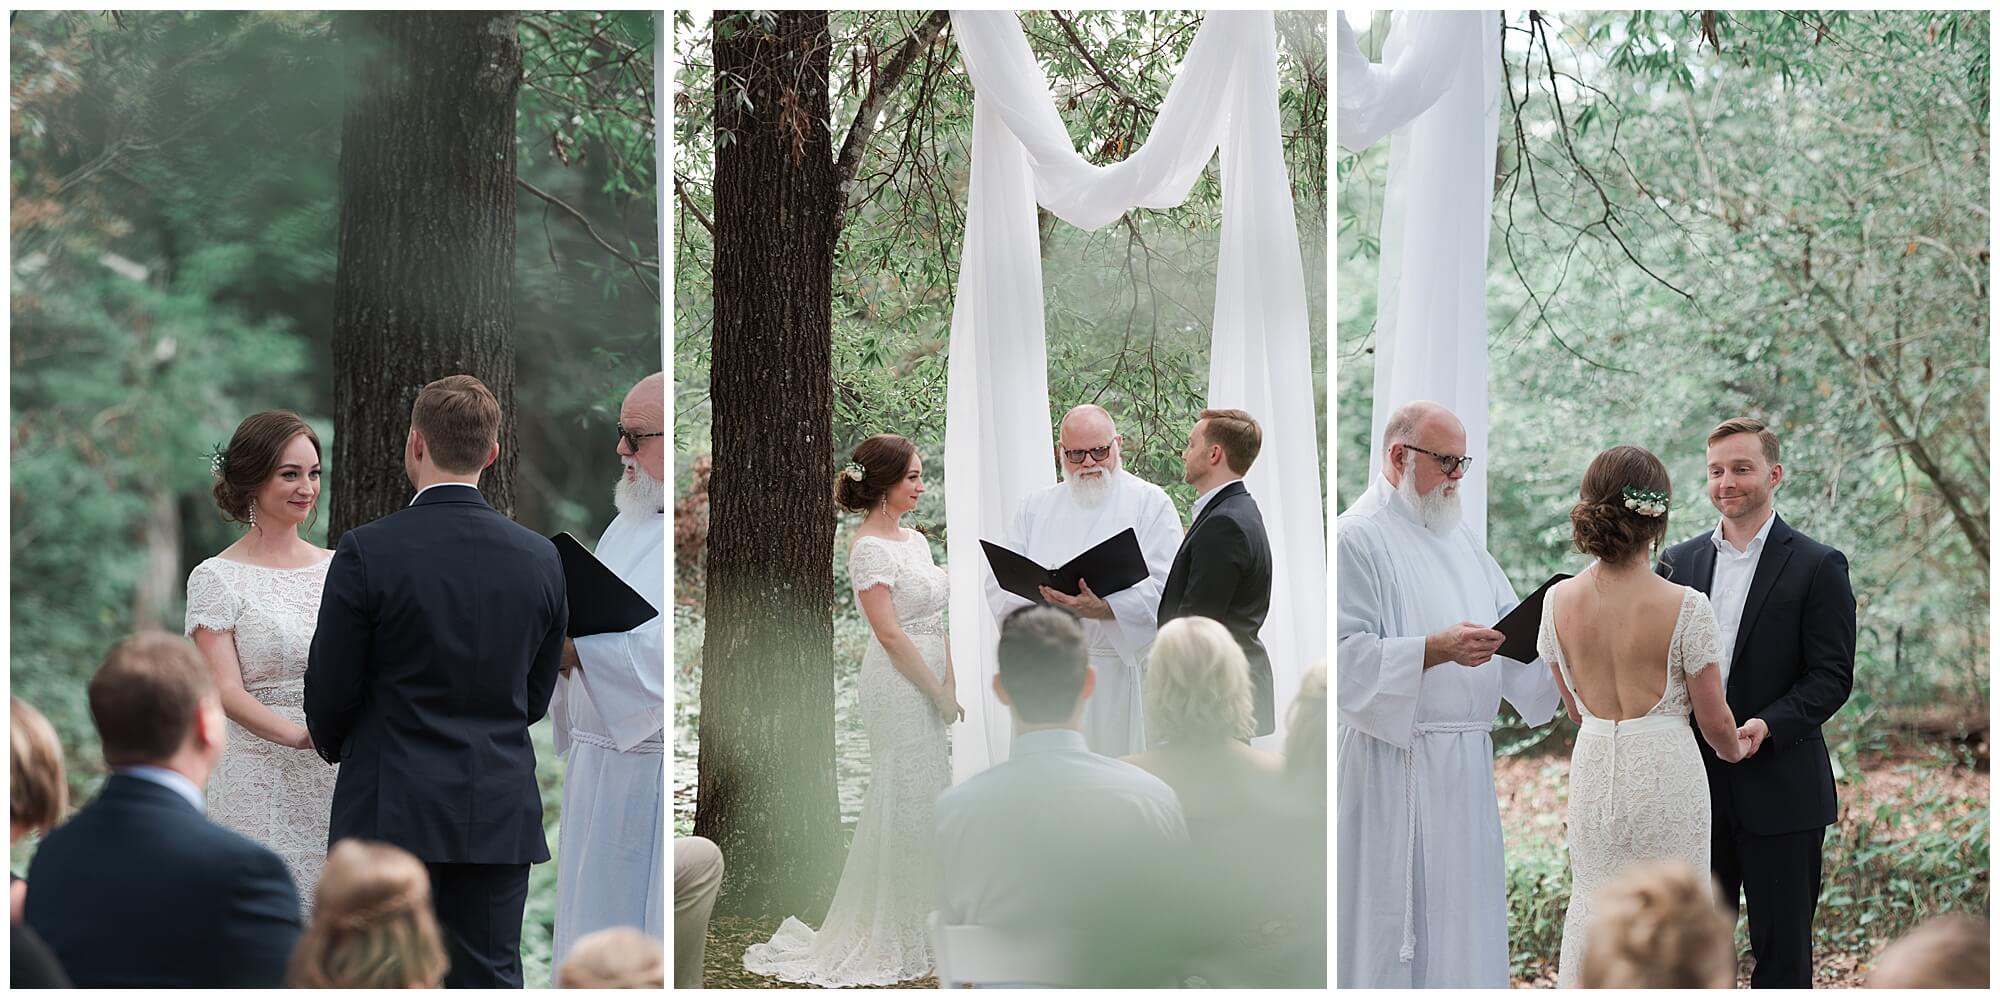 wedding ceremony at the Houston Arboretum in Houston Texas by wedding photographer Swish and Click